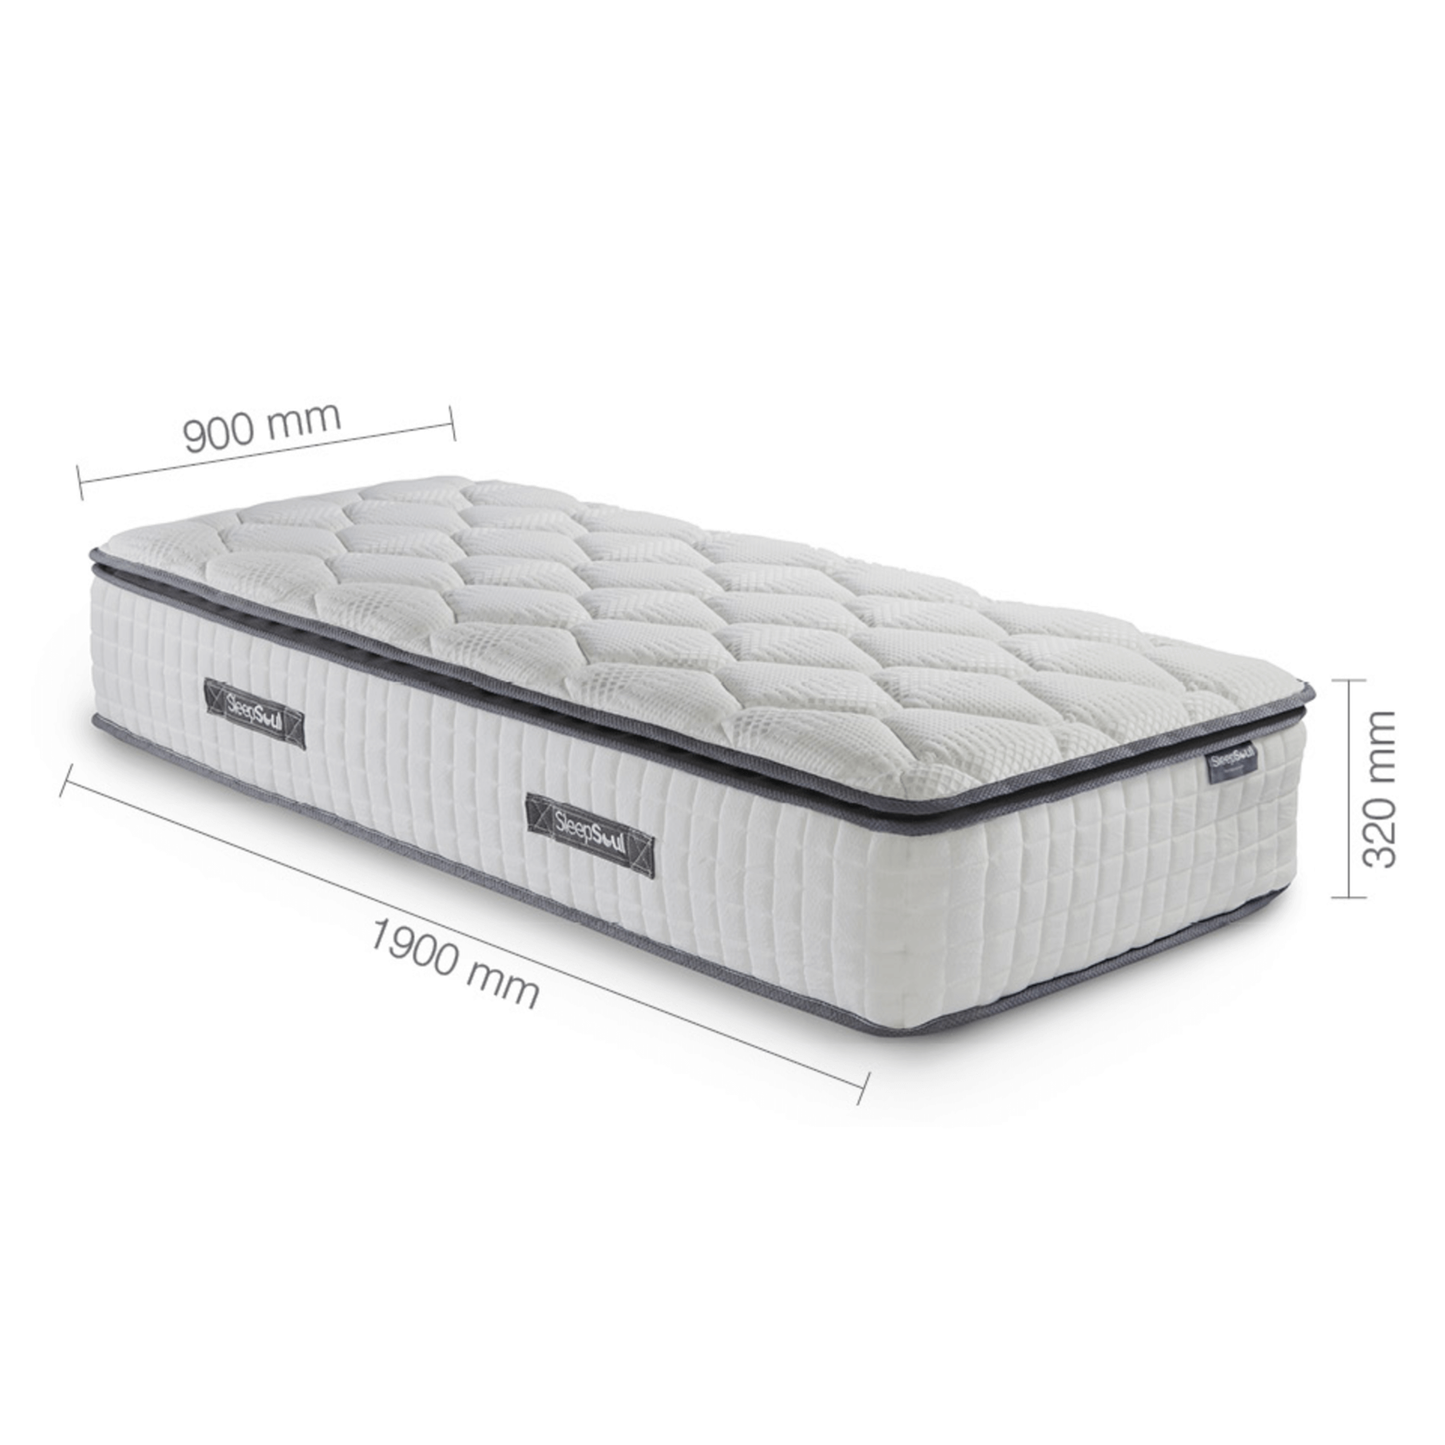 SleepSoul bliss 800 pocket spring and memory foam pillow top standard single mattress dimensions